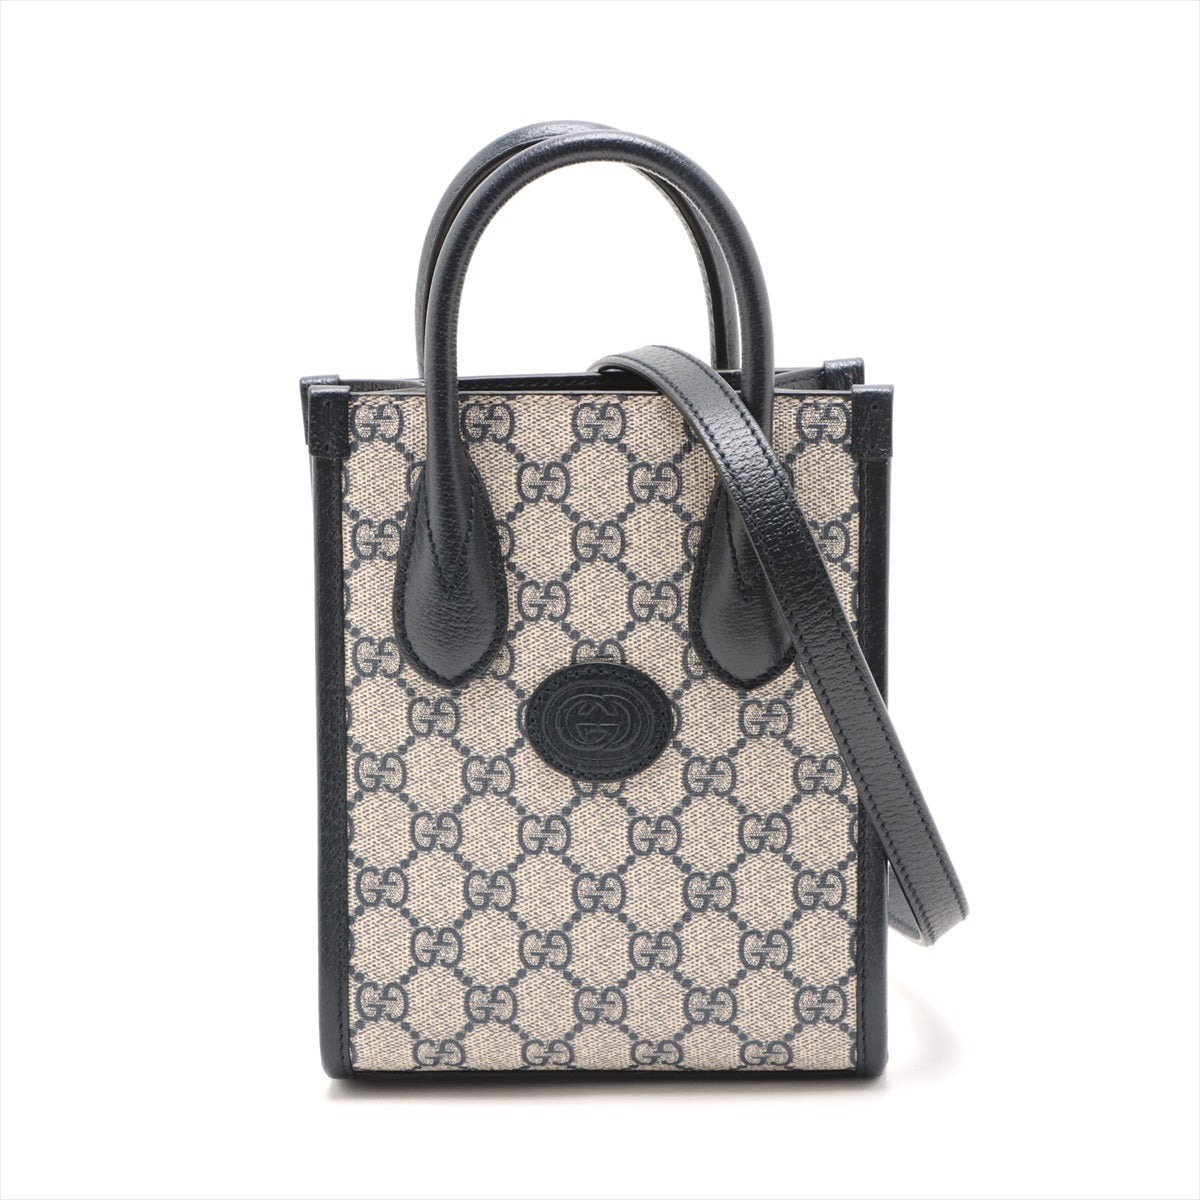 Gucci GG Supreme 2 Way Handbag Navy Blue 671623 shoulder strap with name